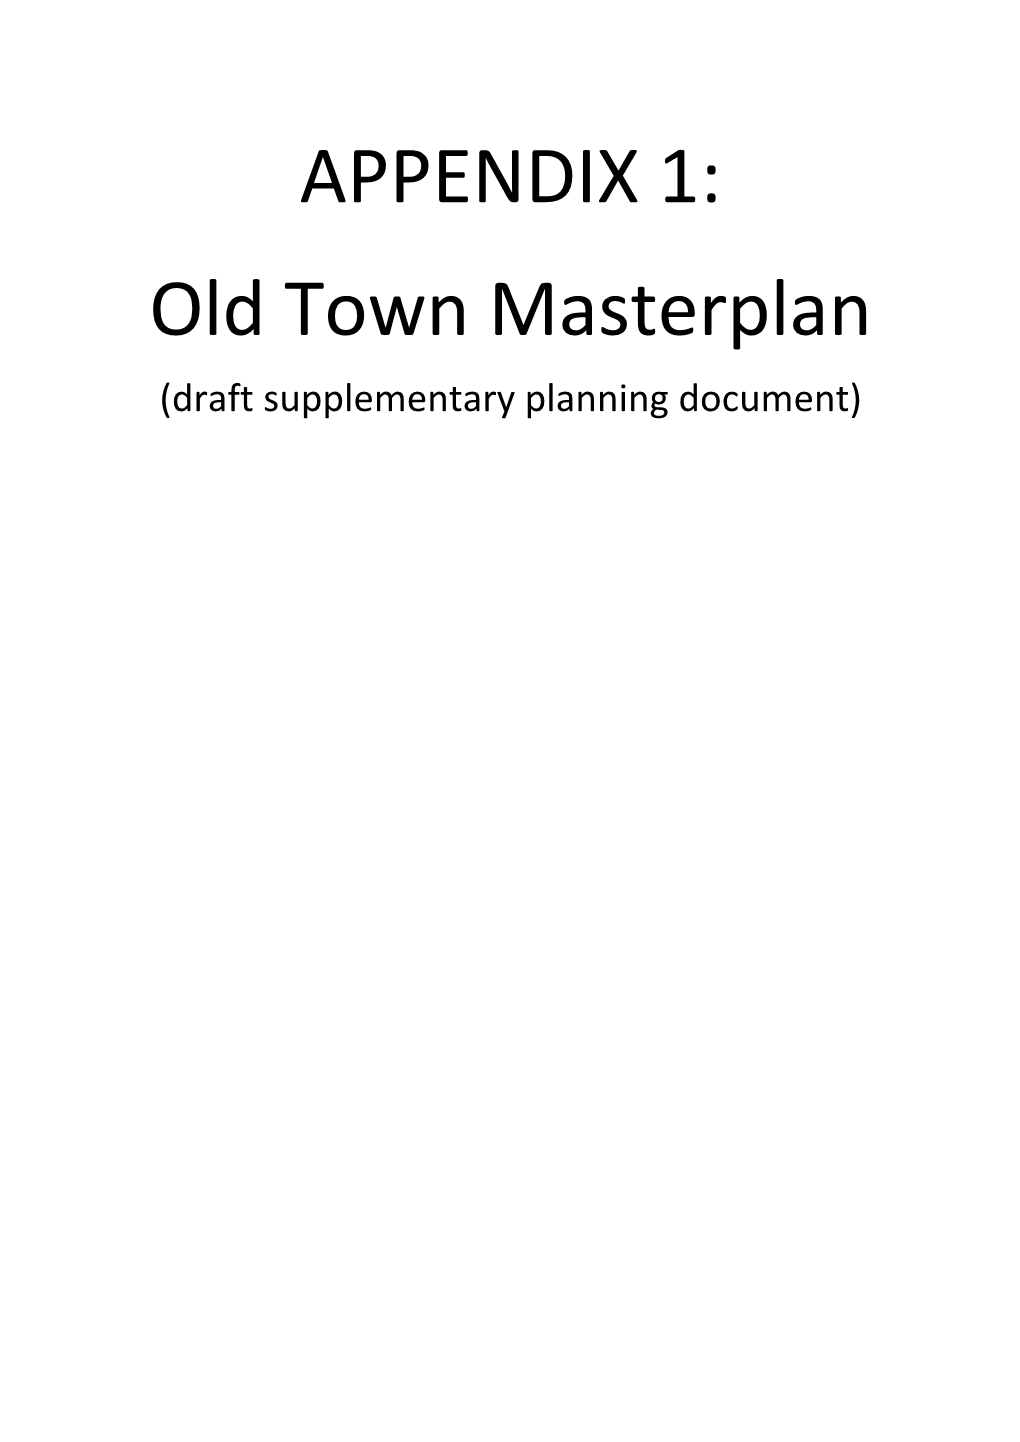 APPENDIX 1: Old Town Masterplan (Draft Supplementary Planning Document) the DRAFT OLD TOWN MASTERPLAN